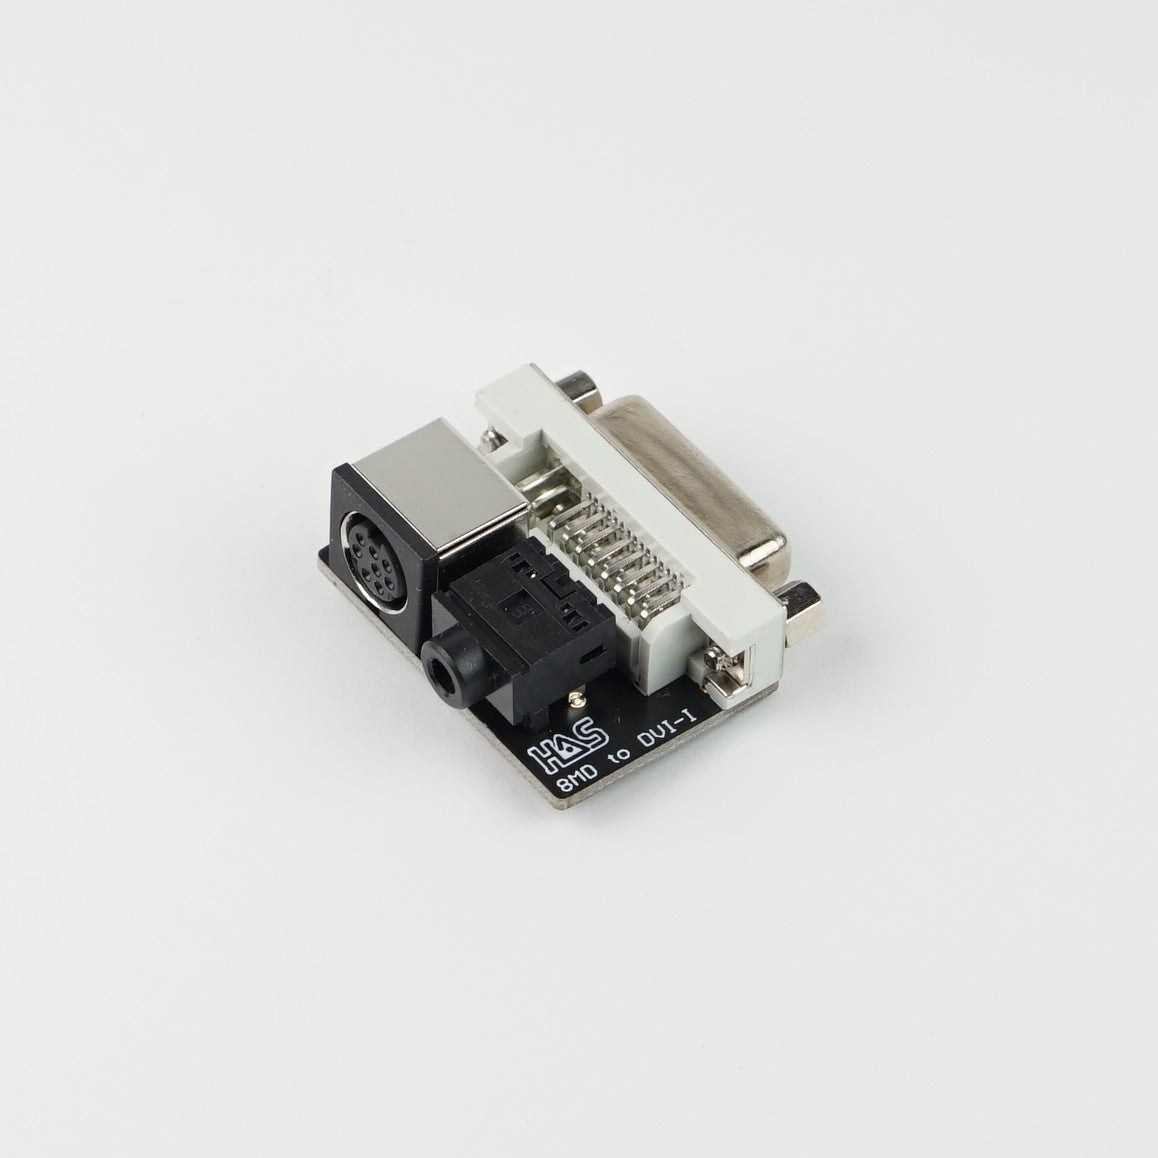 8 pin mini DIN to DVI-I adapter